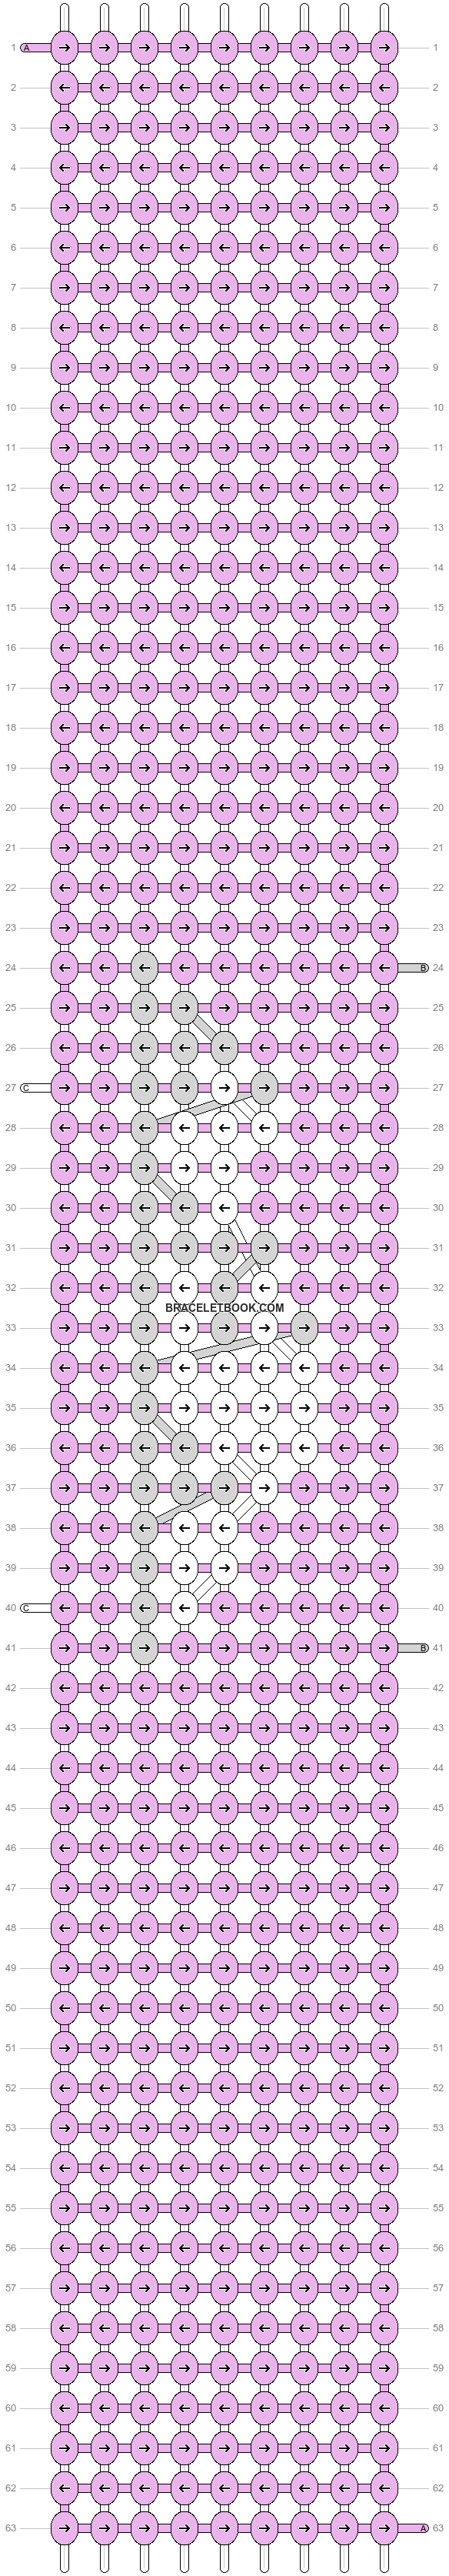 Alpha pattern #50477 variation #80564 pattern